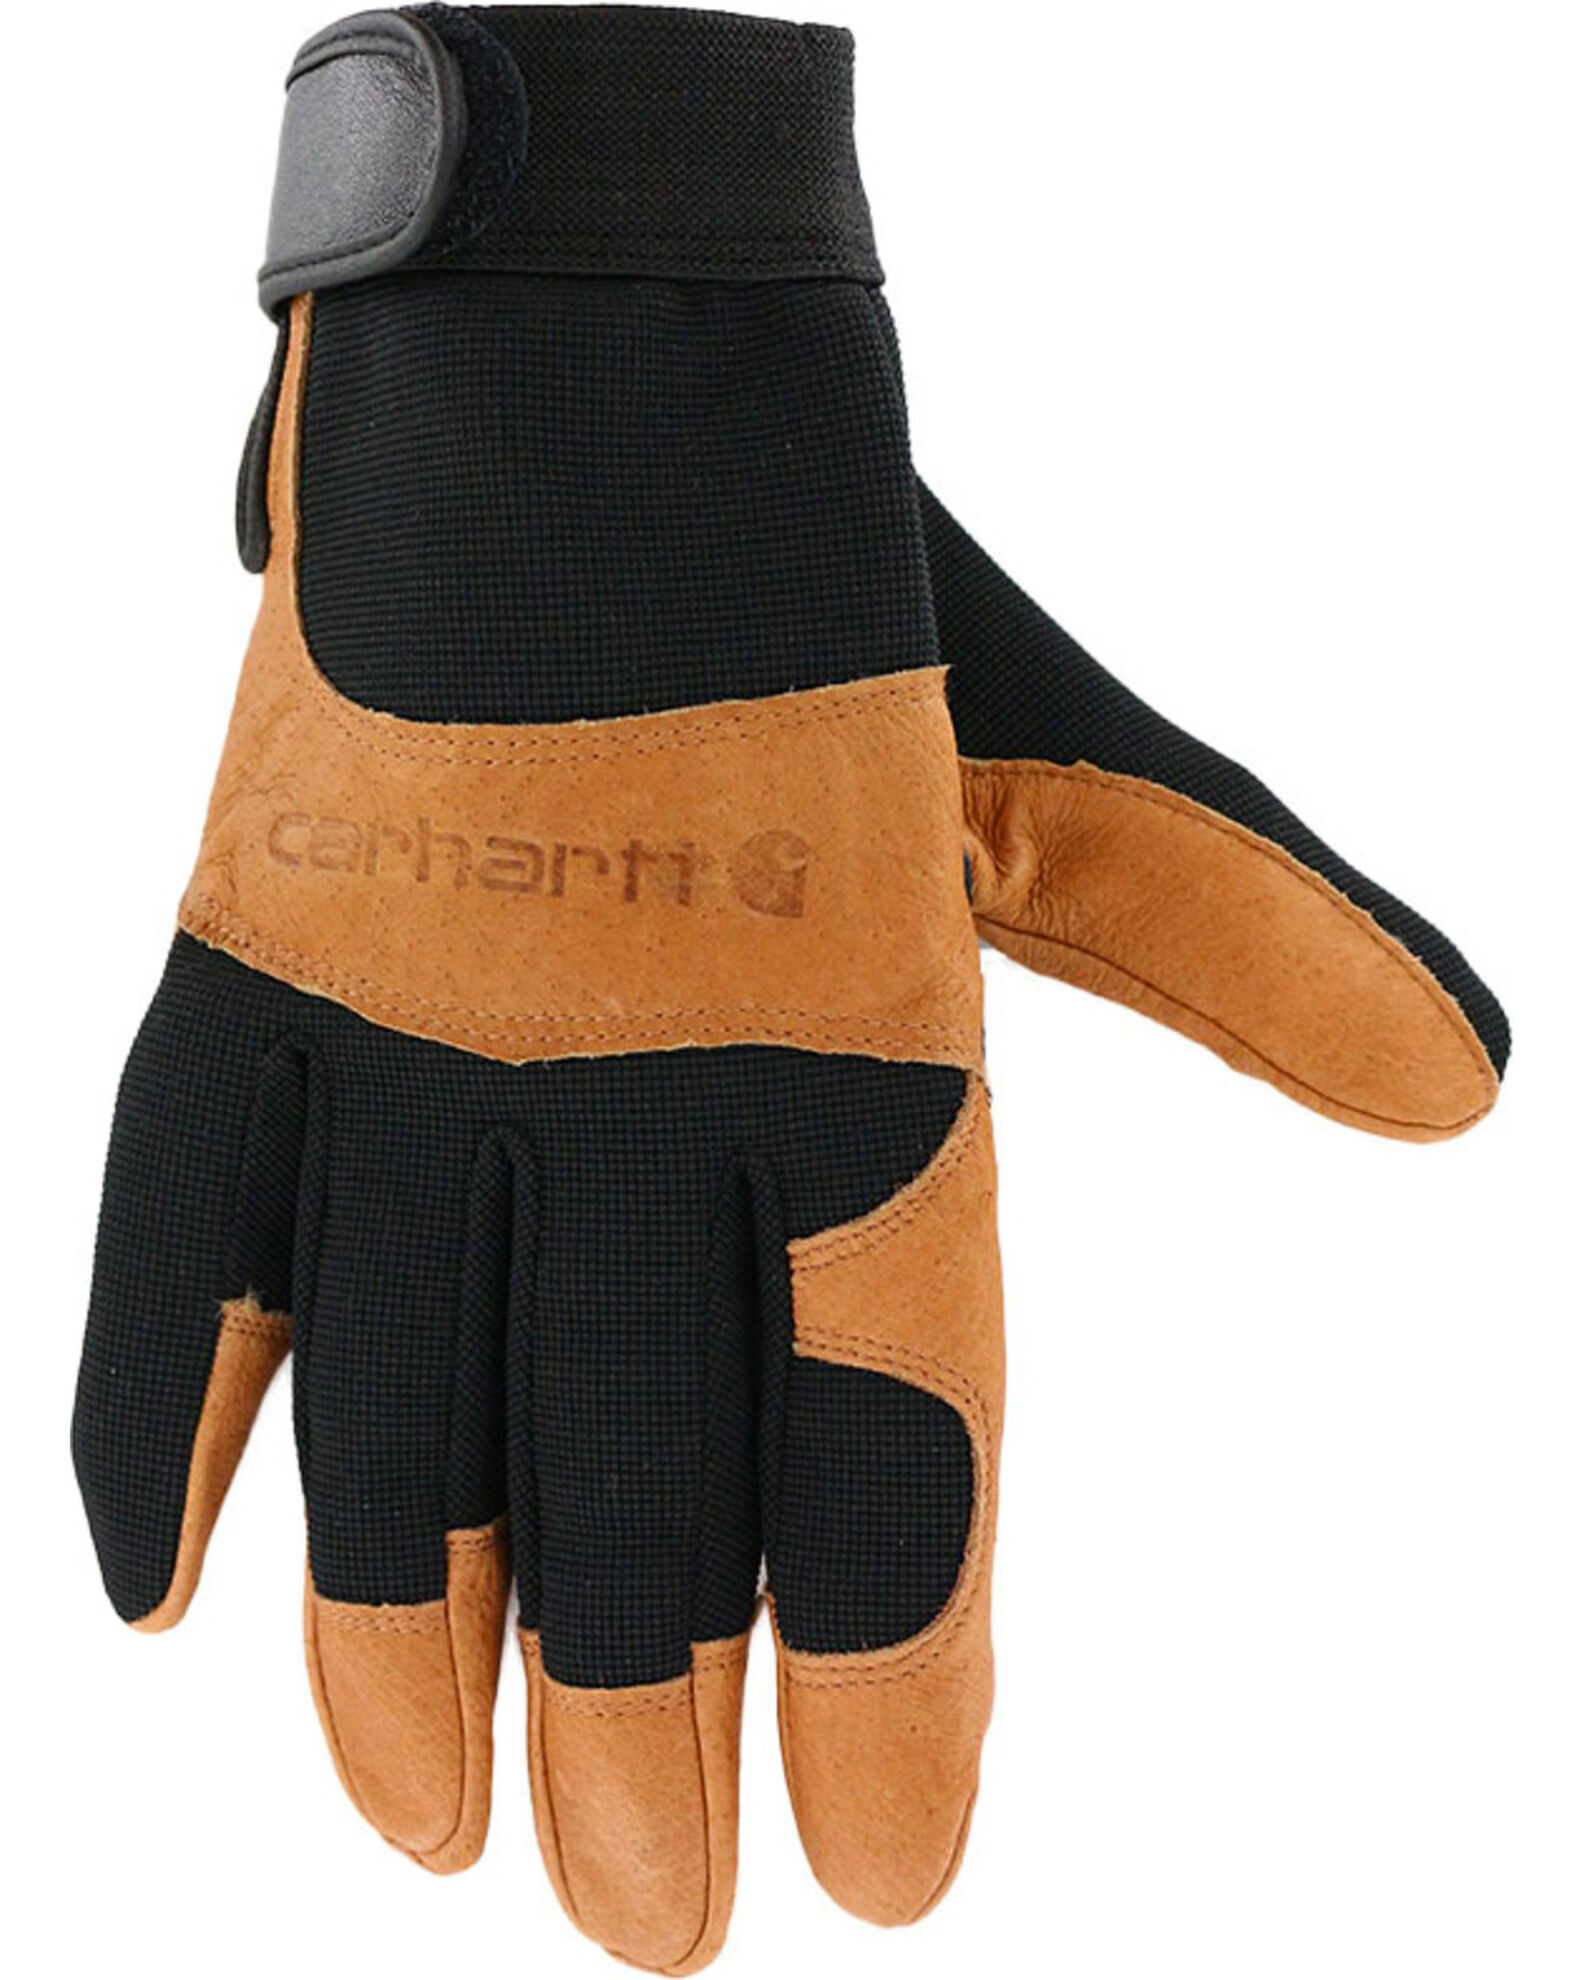 Carhartt Men's The Dex II Gloves, Black